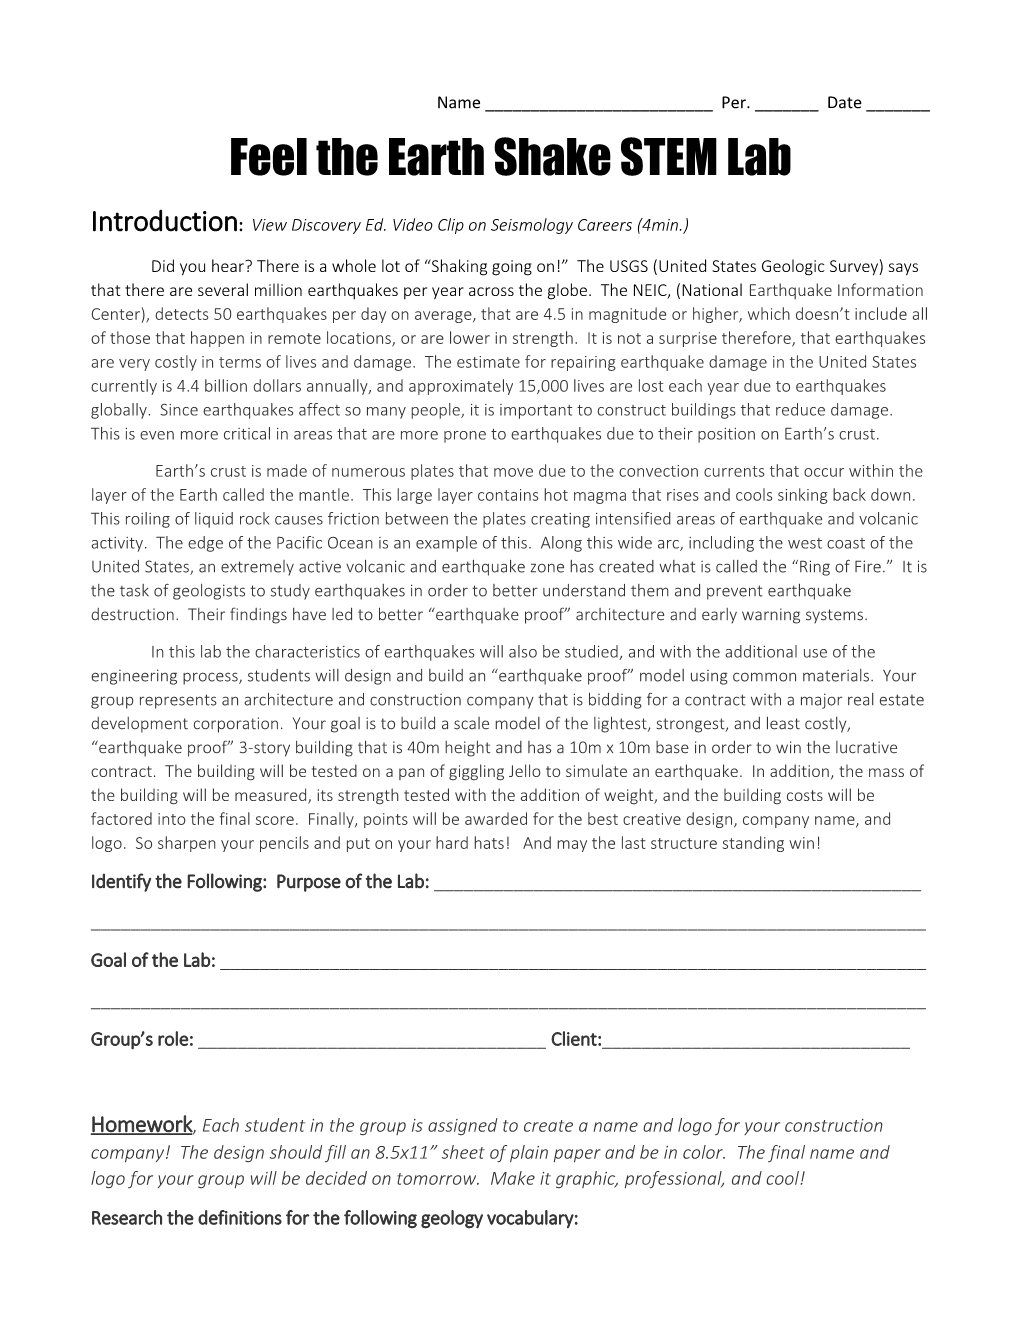 Feel the Earth Shake STEM Lab